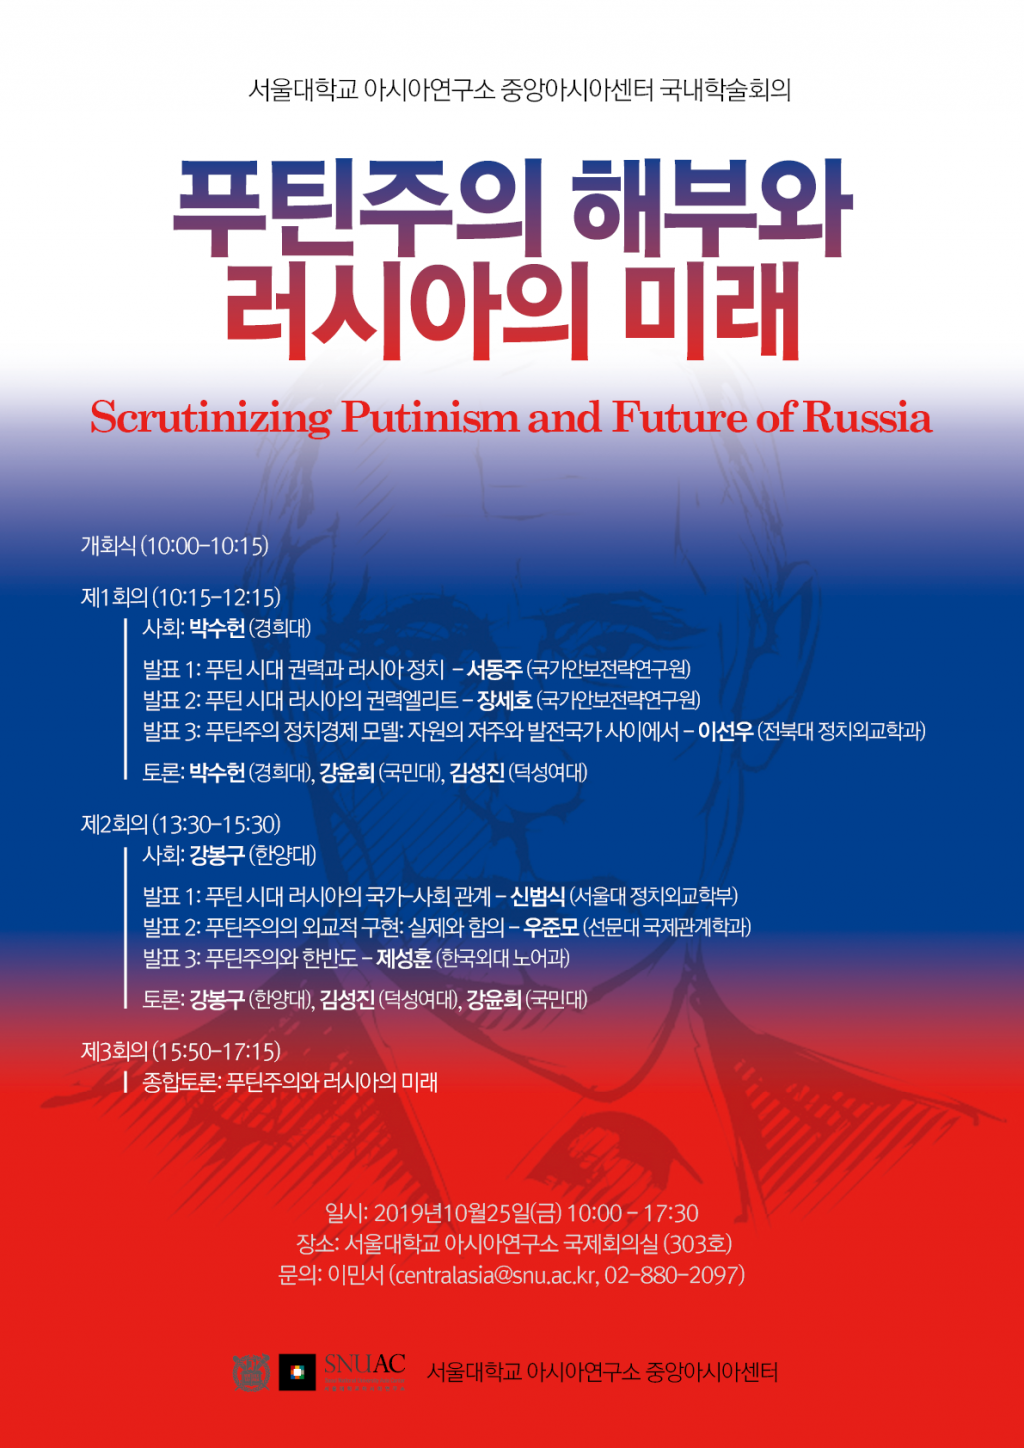 Scrutinizing Putinism and Future of Russia